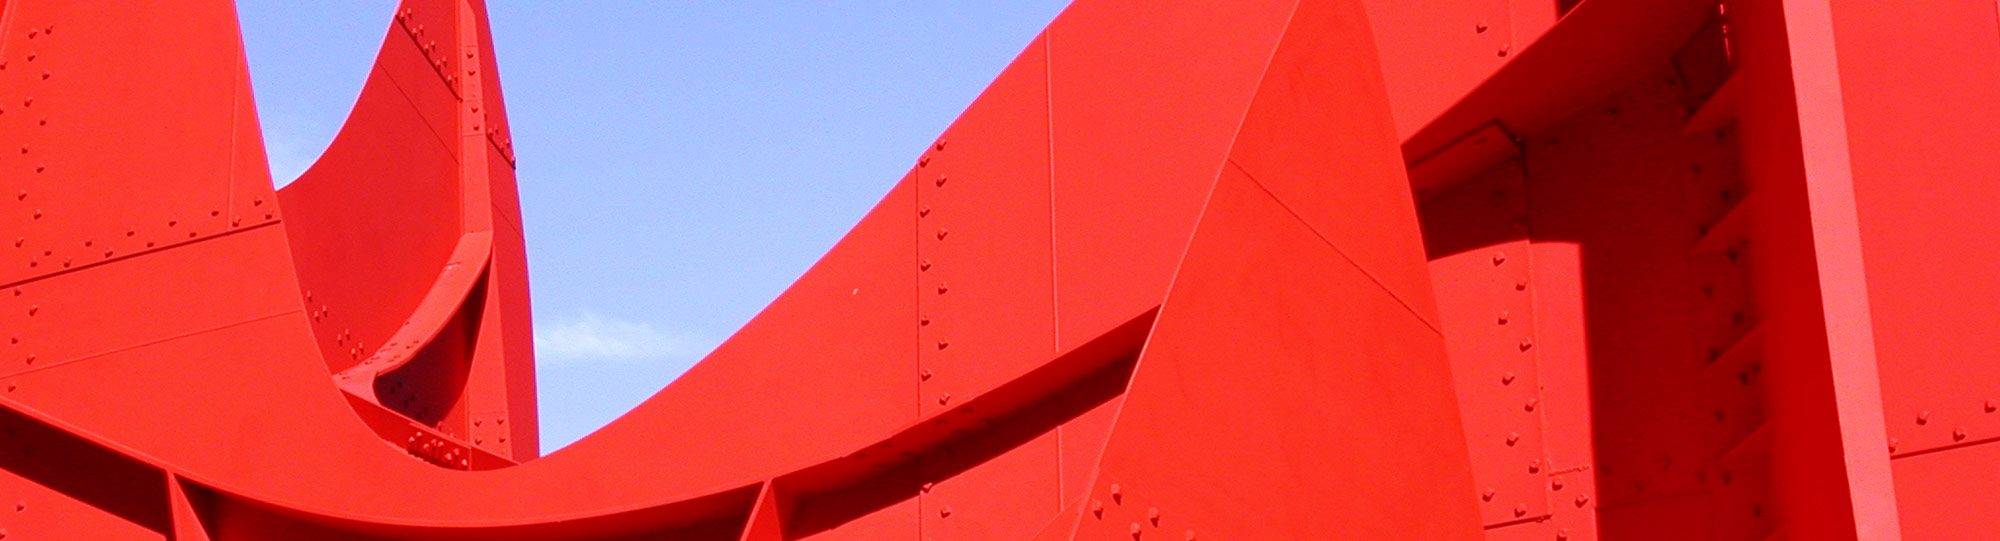 Calder sculpture 'La Grande Vitesse'